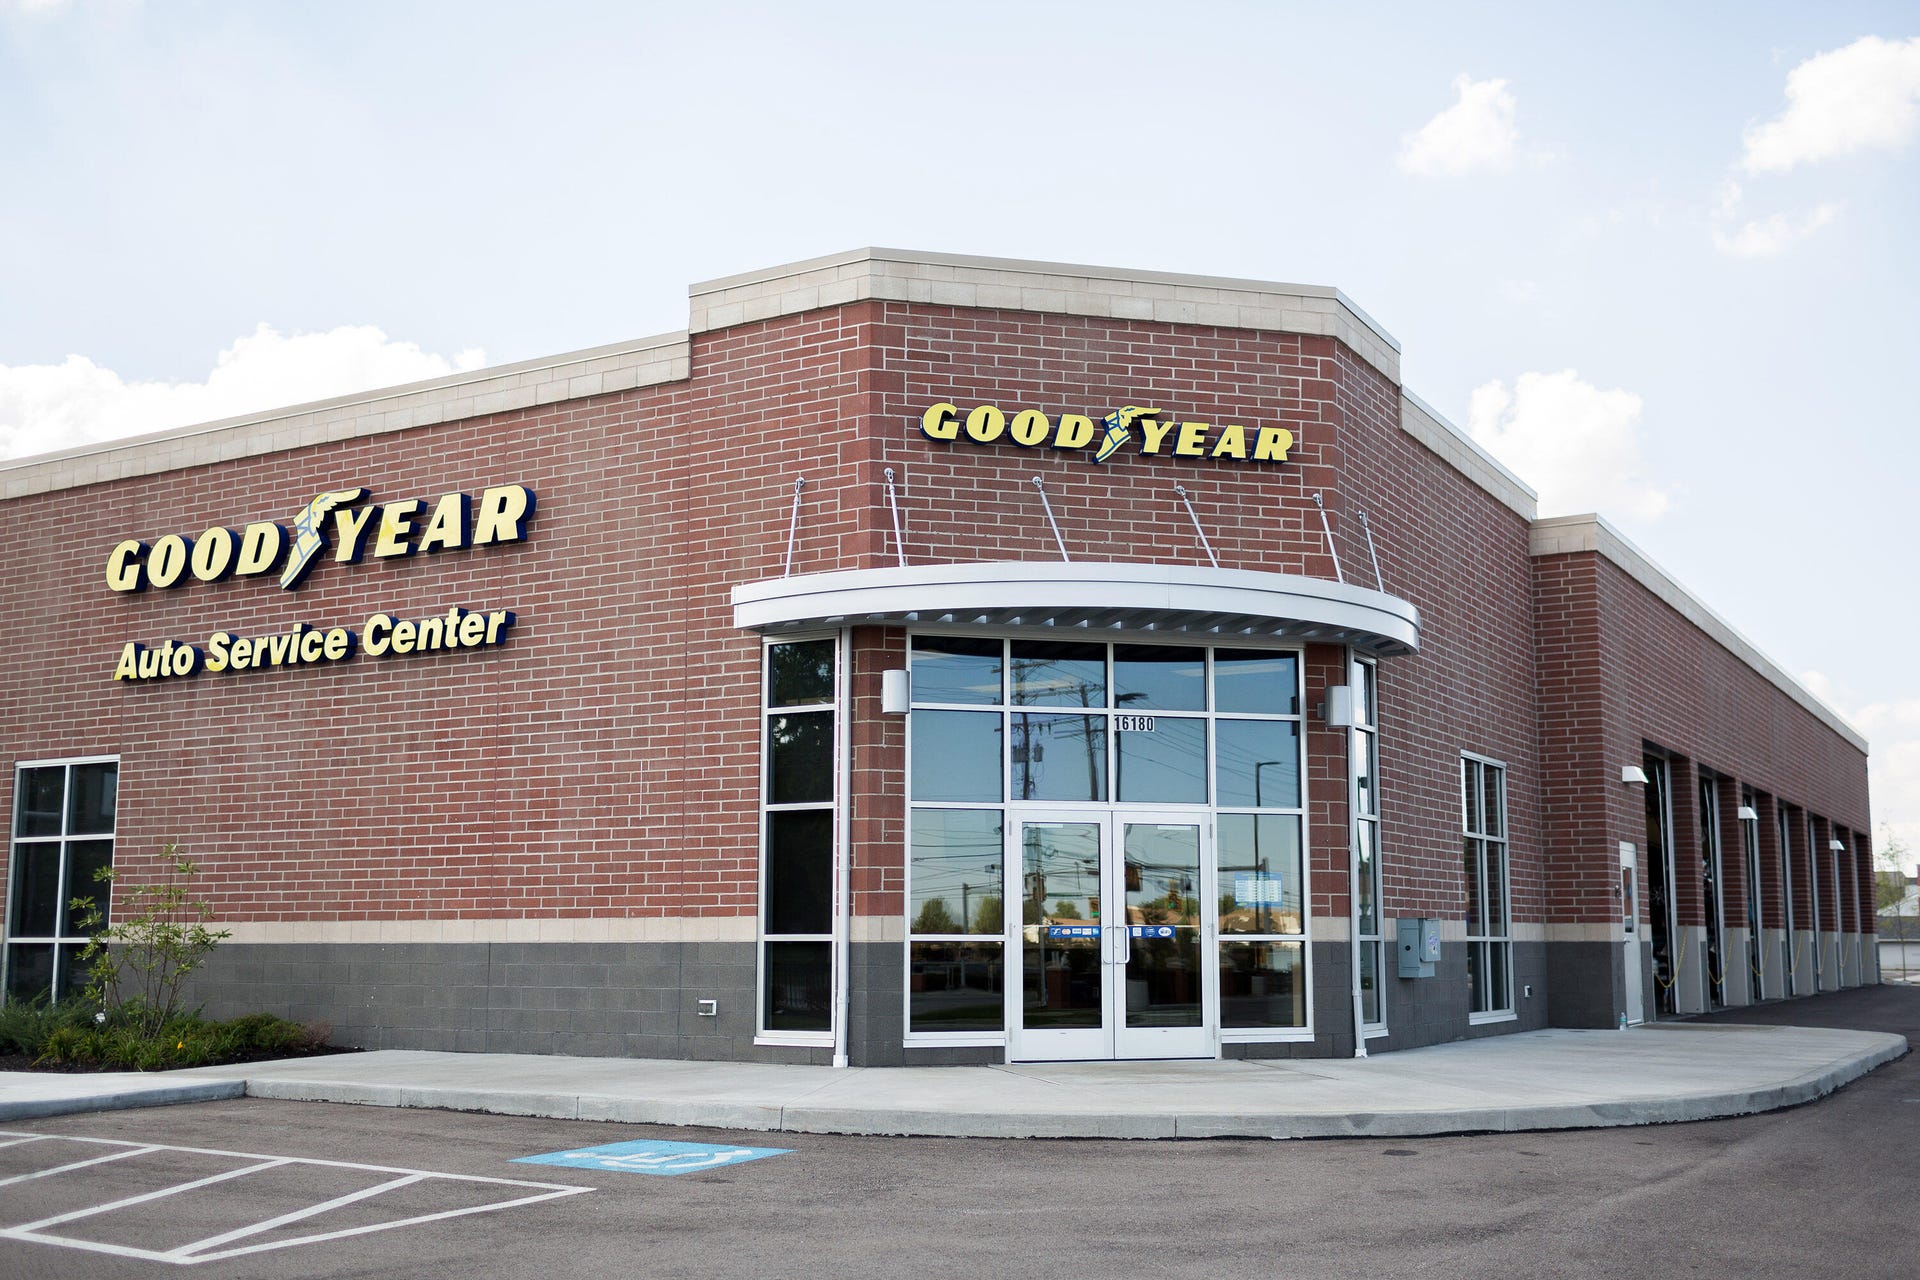 A Goodyear auto service center.